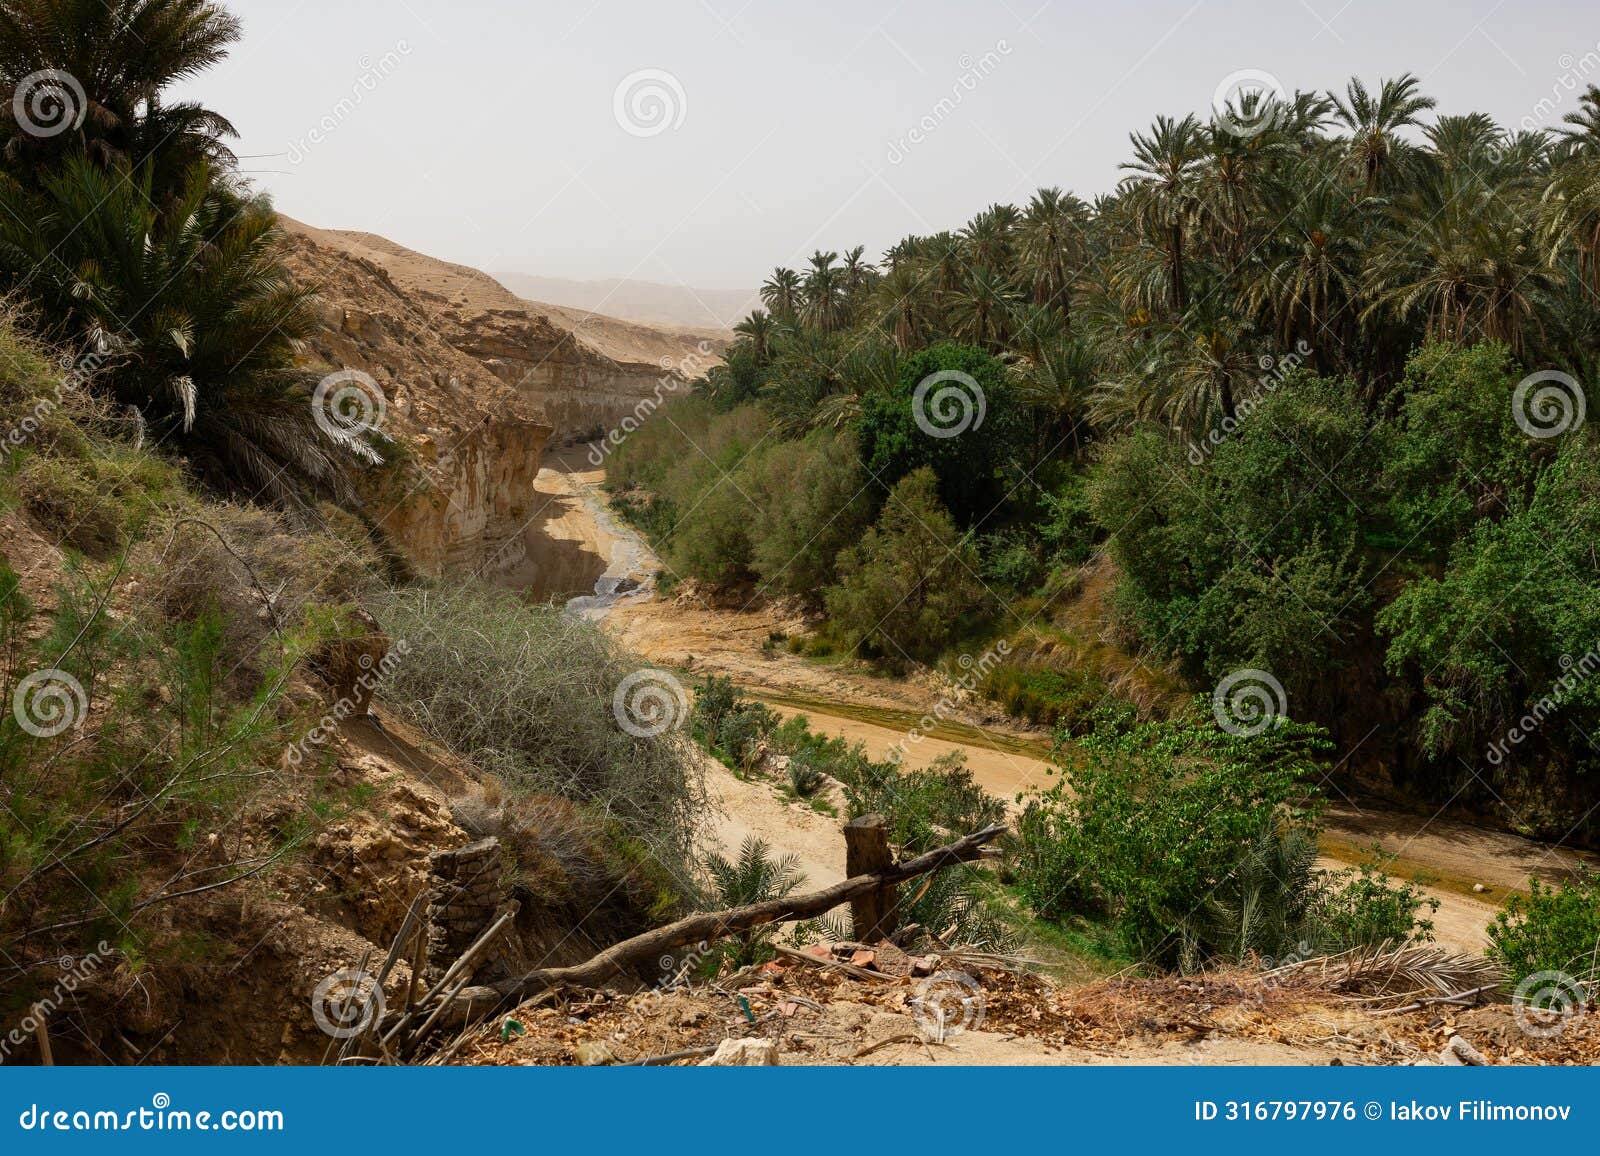 picturesque view of tamerza oasis in tunisia